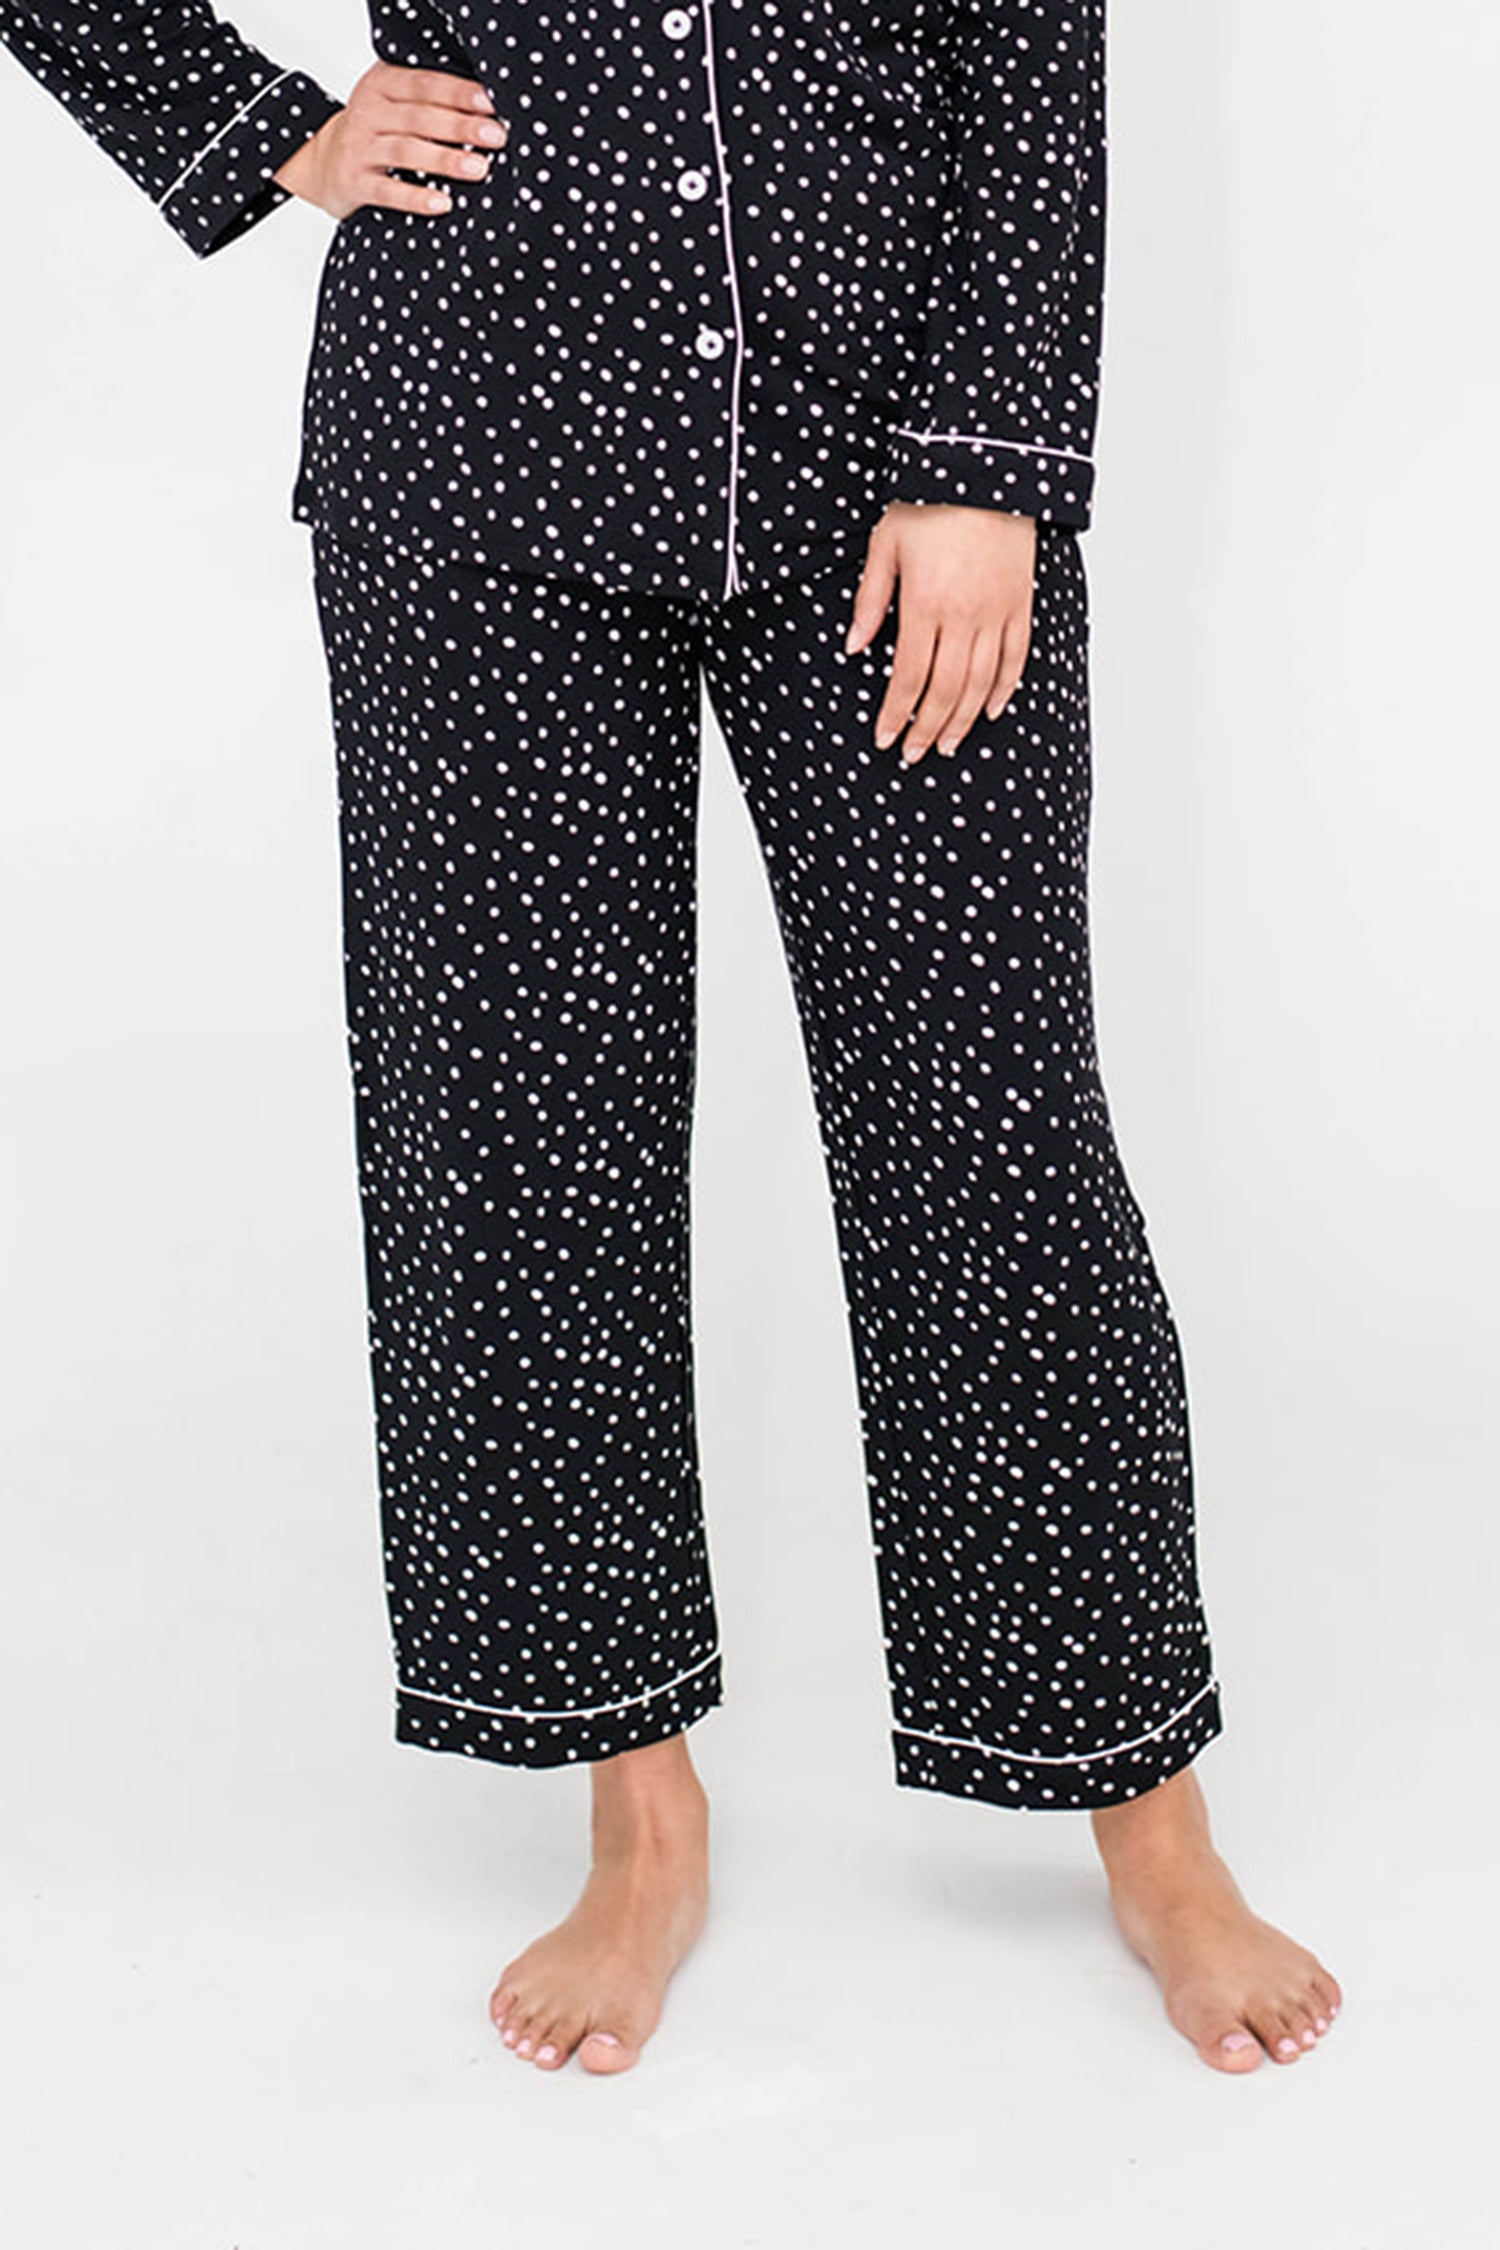 ZOOSIXX Soft Black Pajama Pants for Women, Plaid Comfy Casual